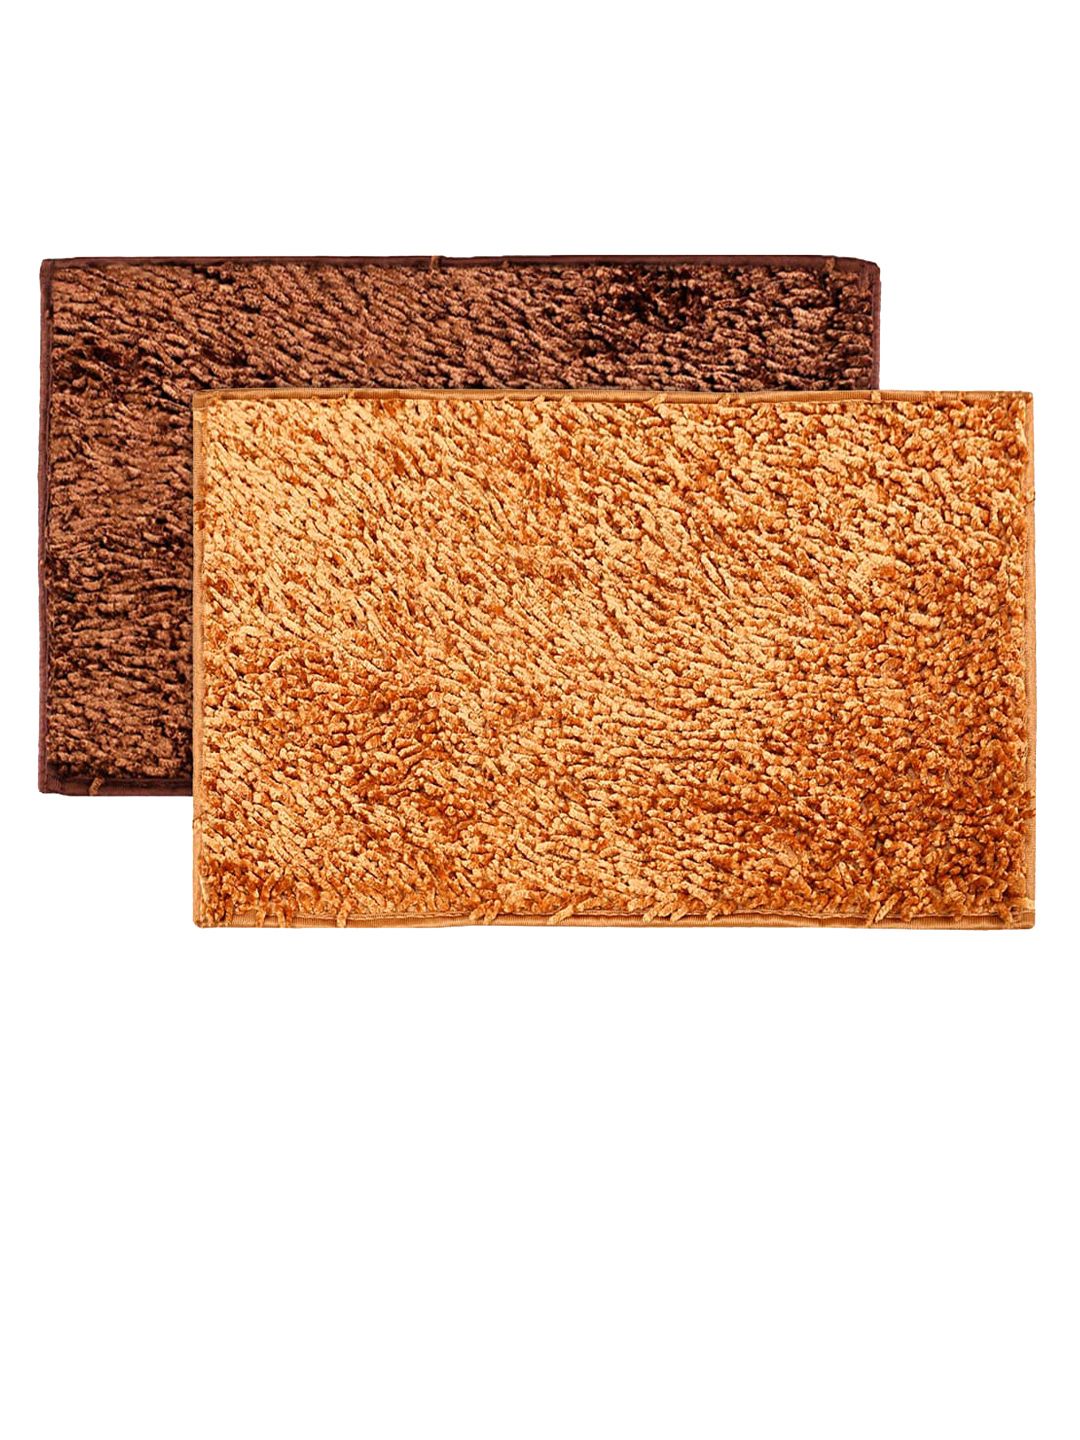 Kuber Industries Set Of 2 Gold & Brown Solid Anti-Skid Doormats Price in India